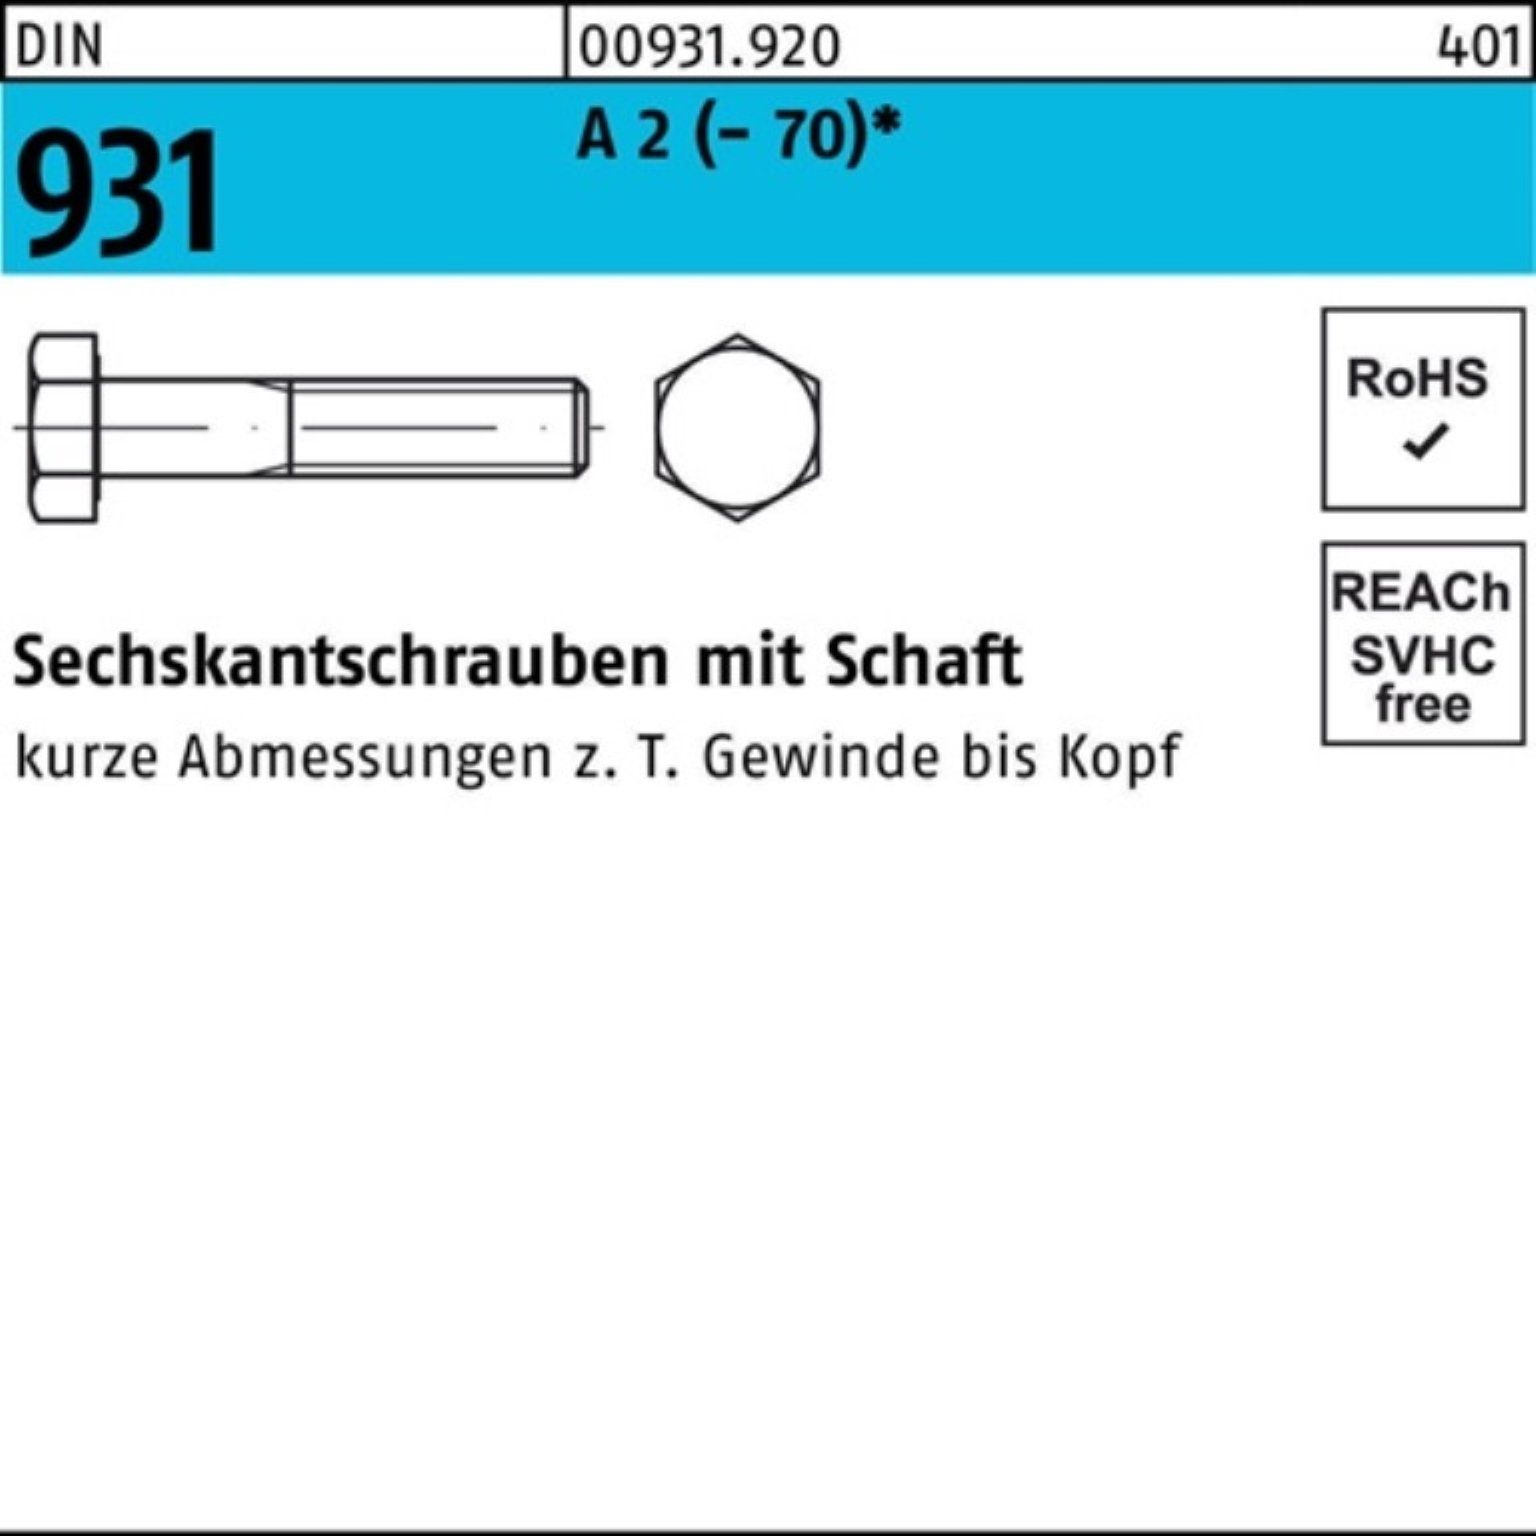 Reyher Sechskantschraube 100er Pack Sechskantschraube DIN 931 Schaft M24x 130 A 2 (70) 1 Stü | Schrauben